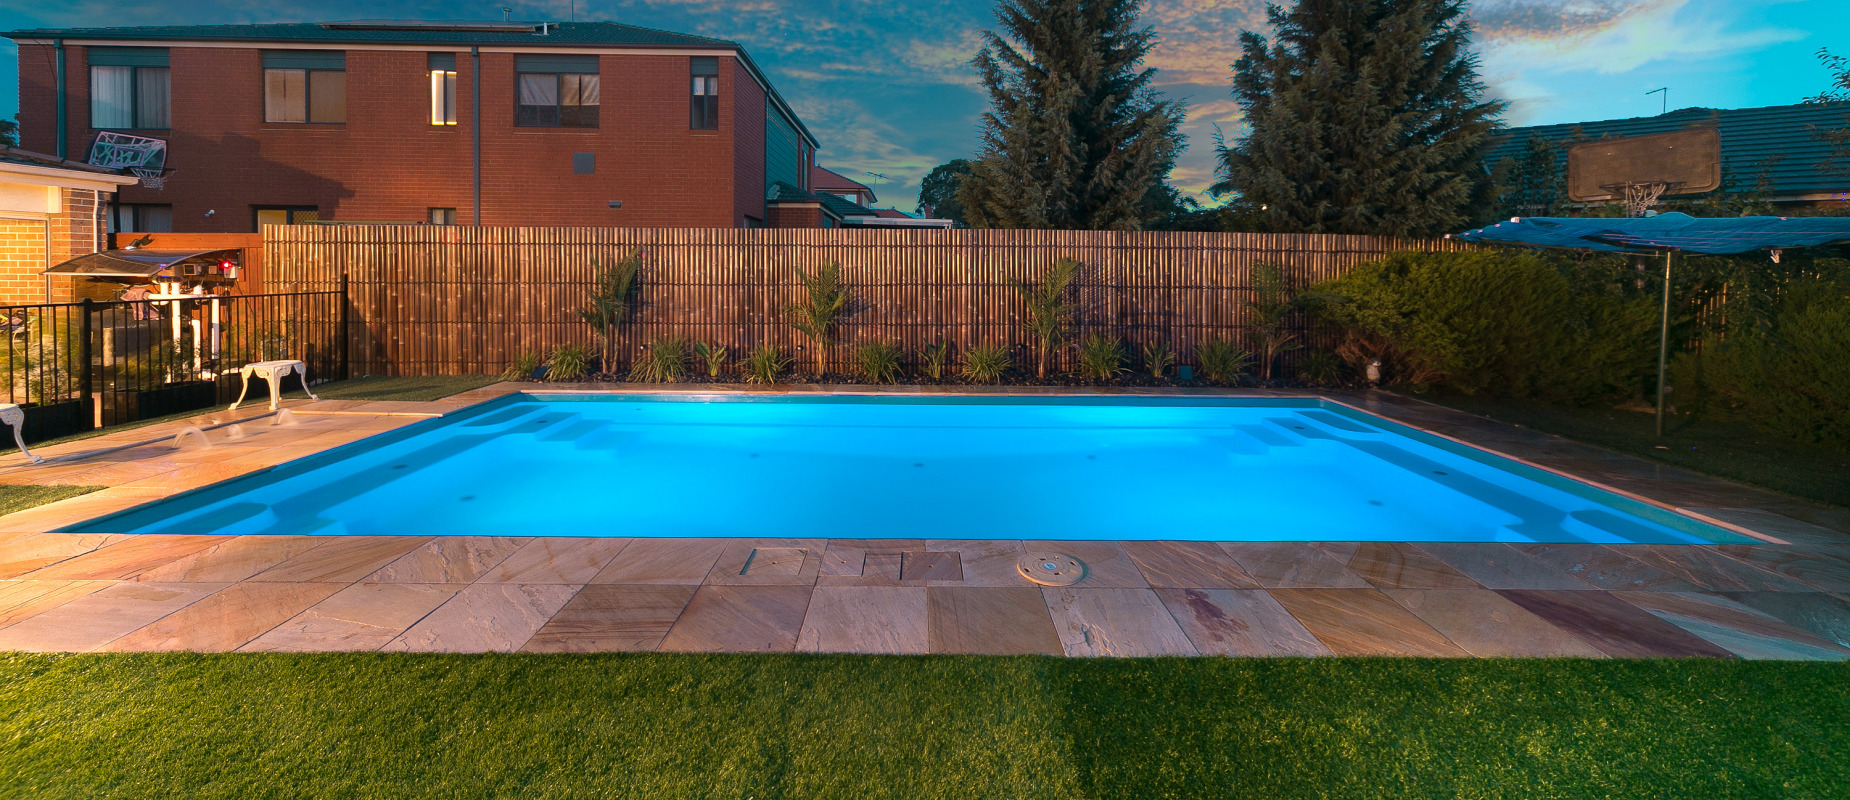 Compass-Pools-Australia_Contemporary-pool-design-idea-with-lights